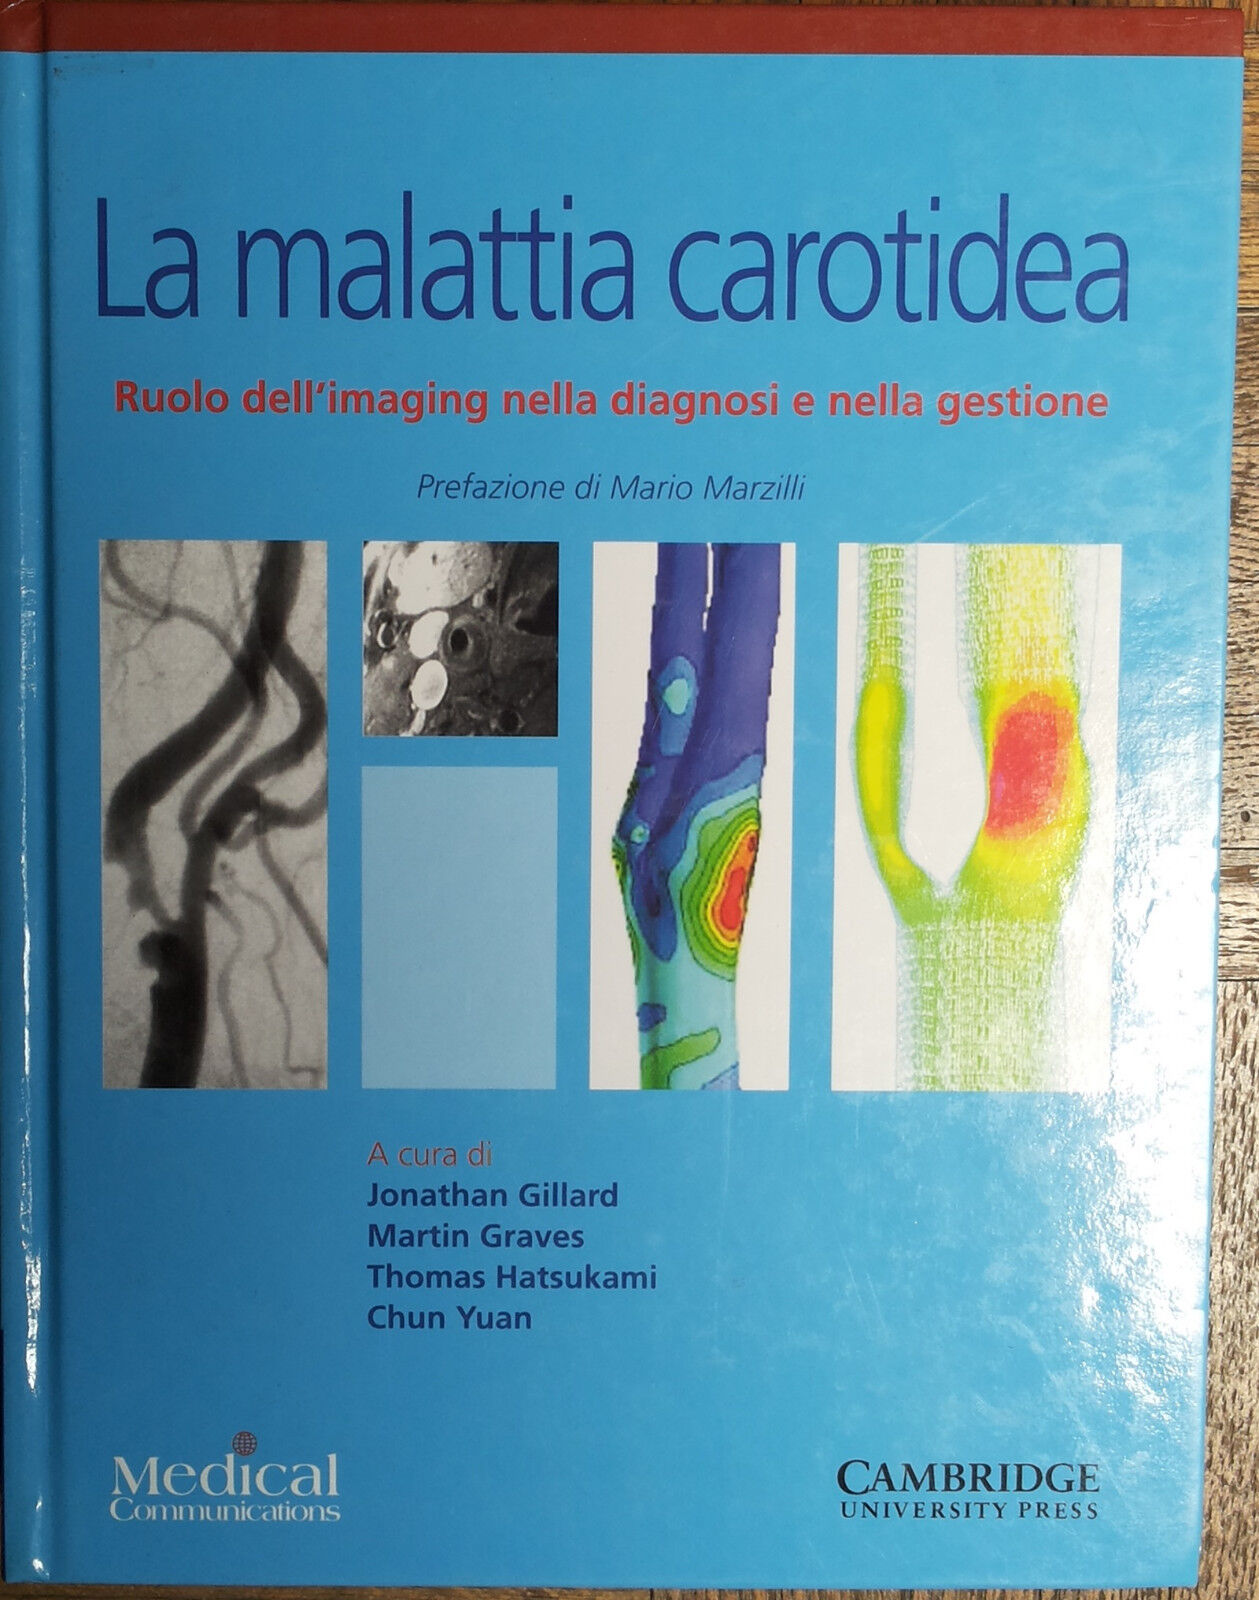 La malattia carotidea - AA.VV. - Cambridge University Press,2008 - R